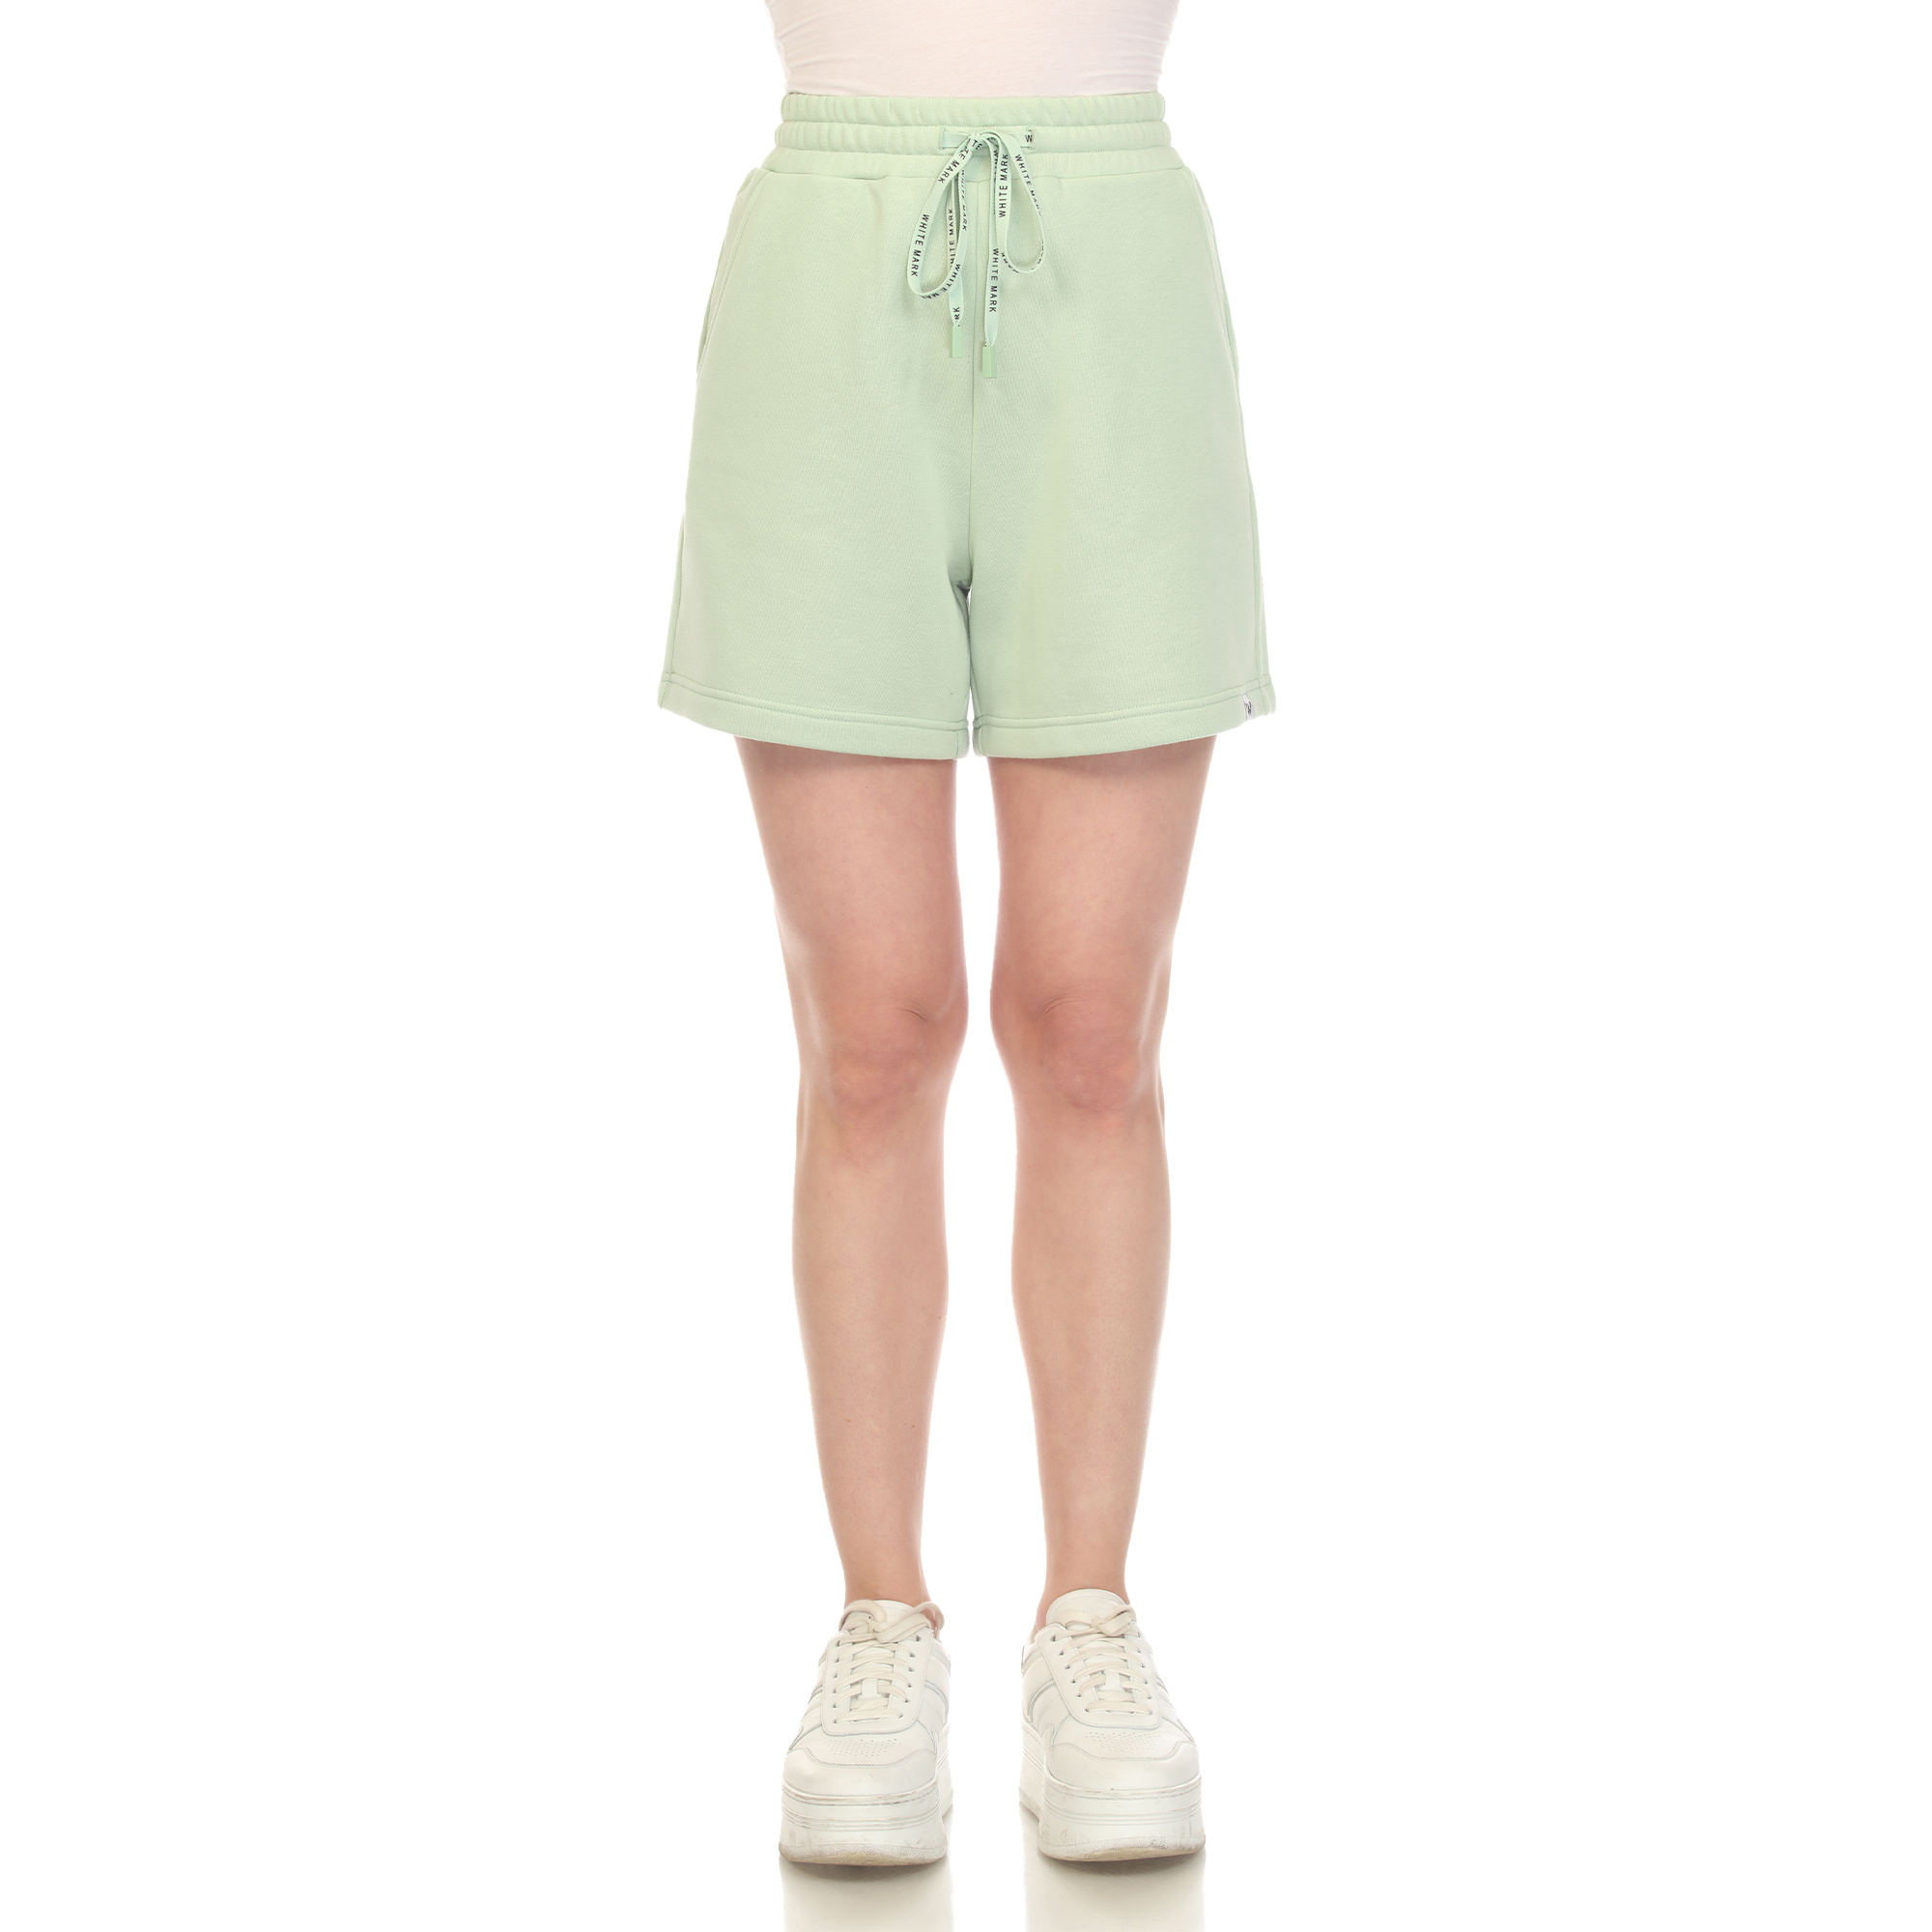 White Mark Women's Super Soft Drawstring Waistband Sweat Shorts - Sage, 1X